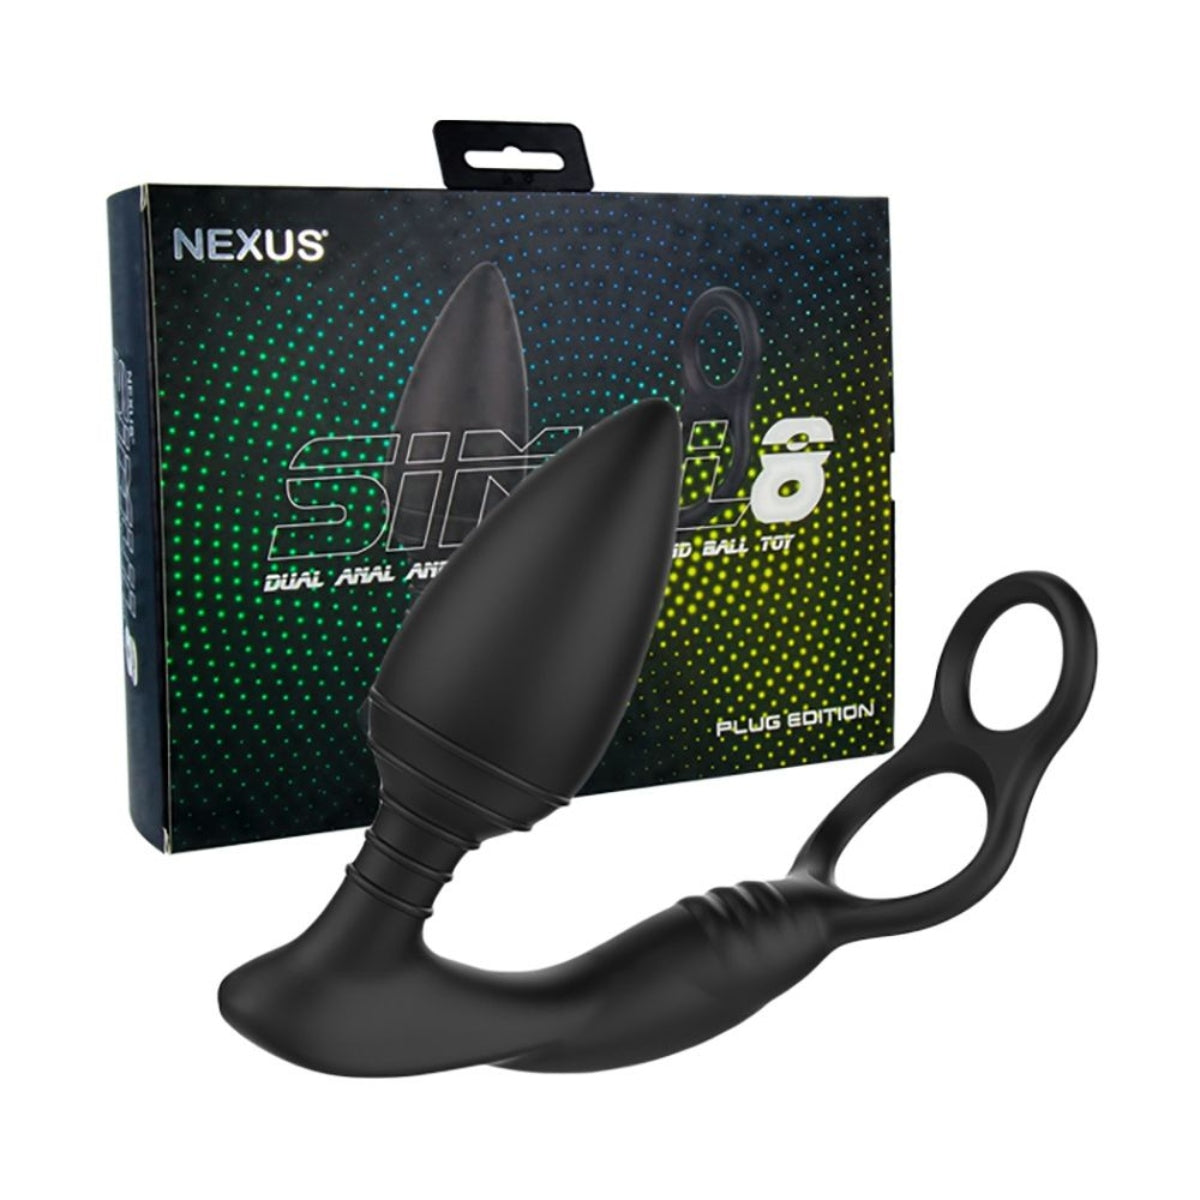 Nexus Simul8 Dual Anal & Perineum Cock & Ball Butt Plug Black